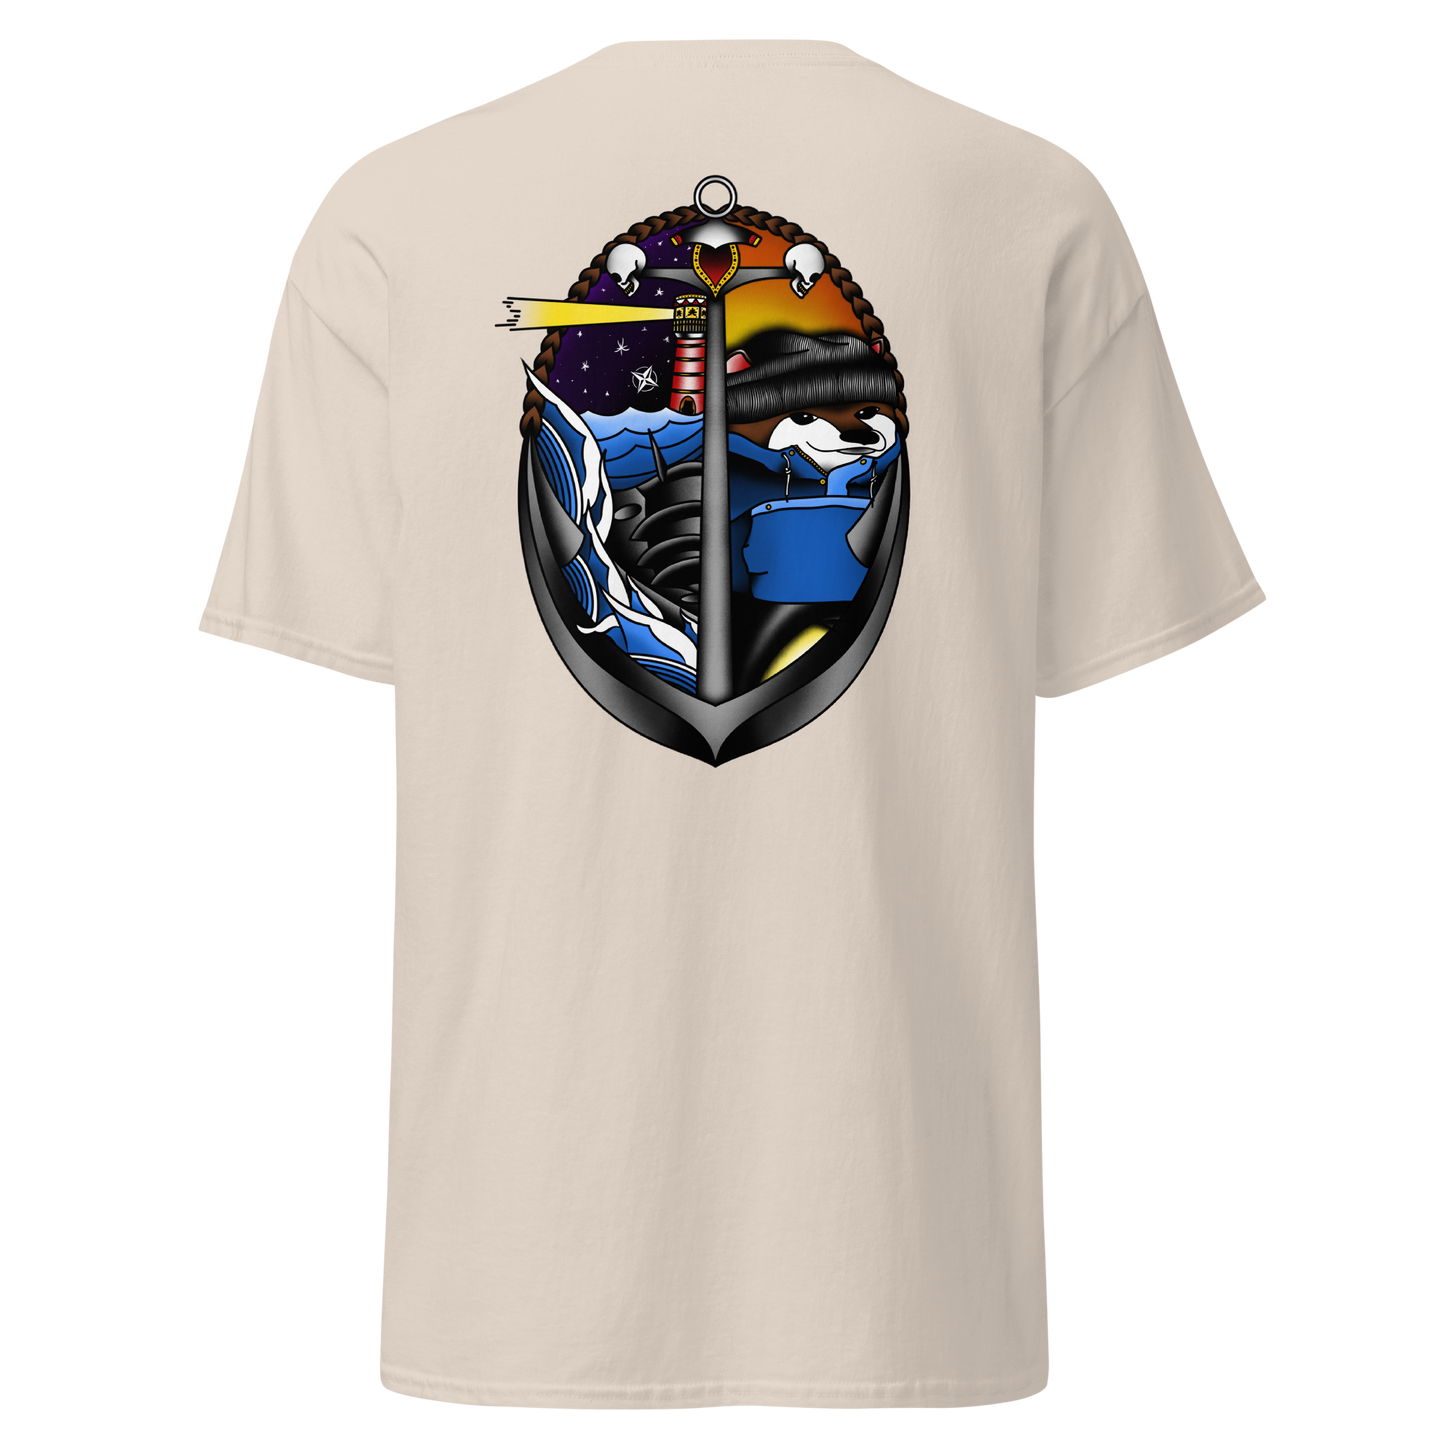 NAFO Lighthouse T-Shirt